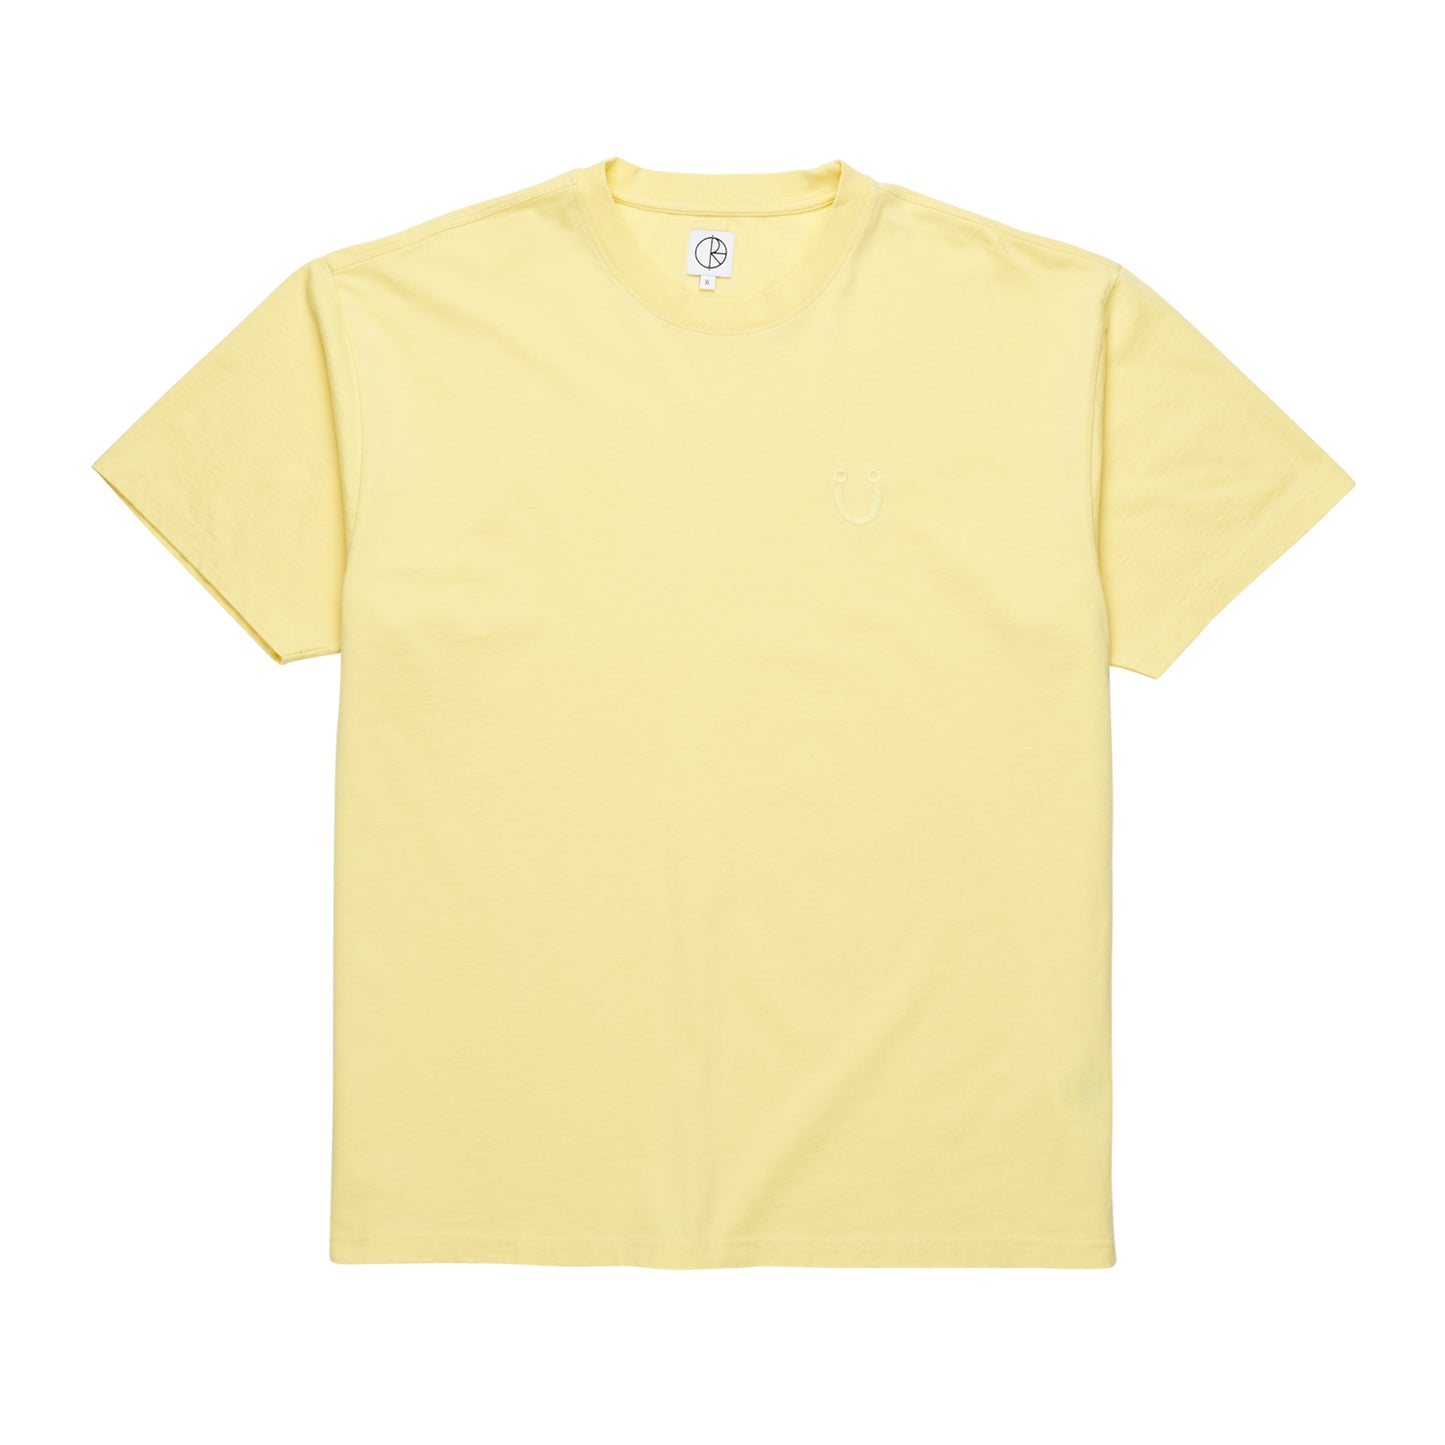 Happy Sad Garment Dyed Tee Shirt Lt.Yellow